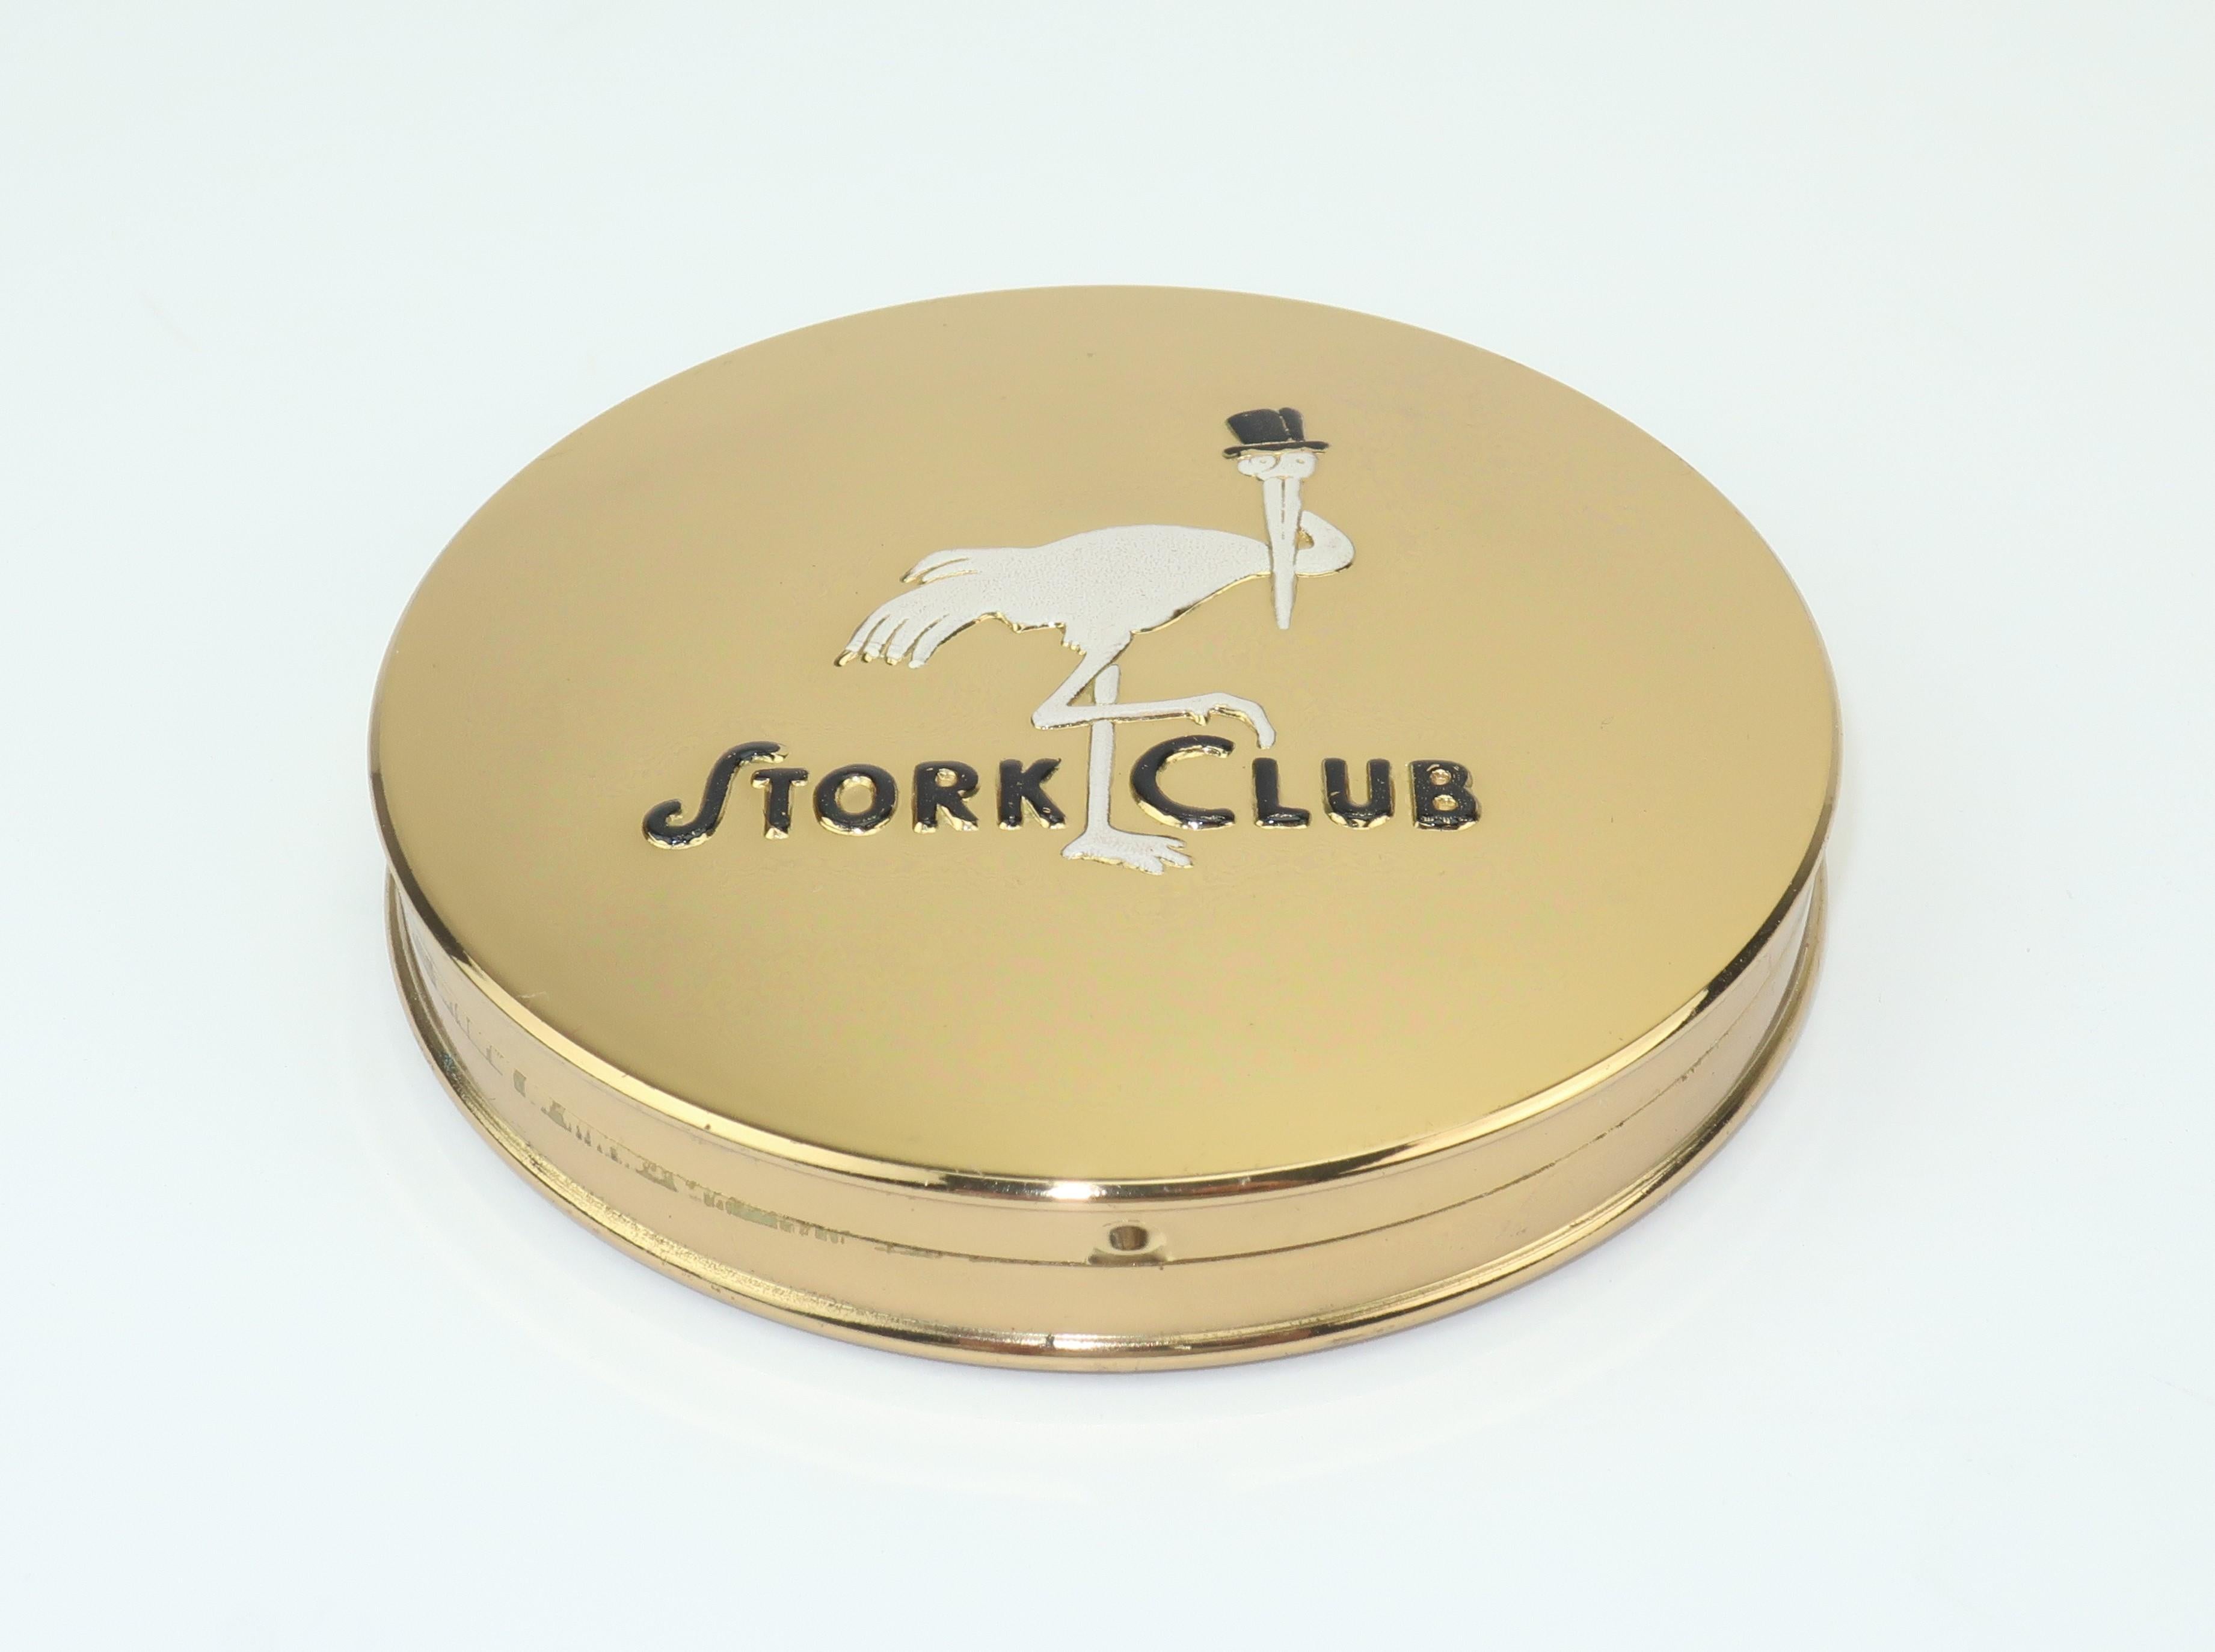 Women's 1950's Stork Club Souvenir Mirrored Powder Compact